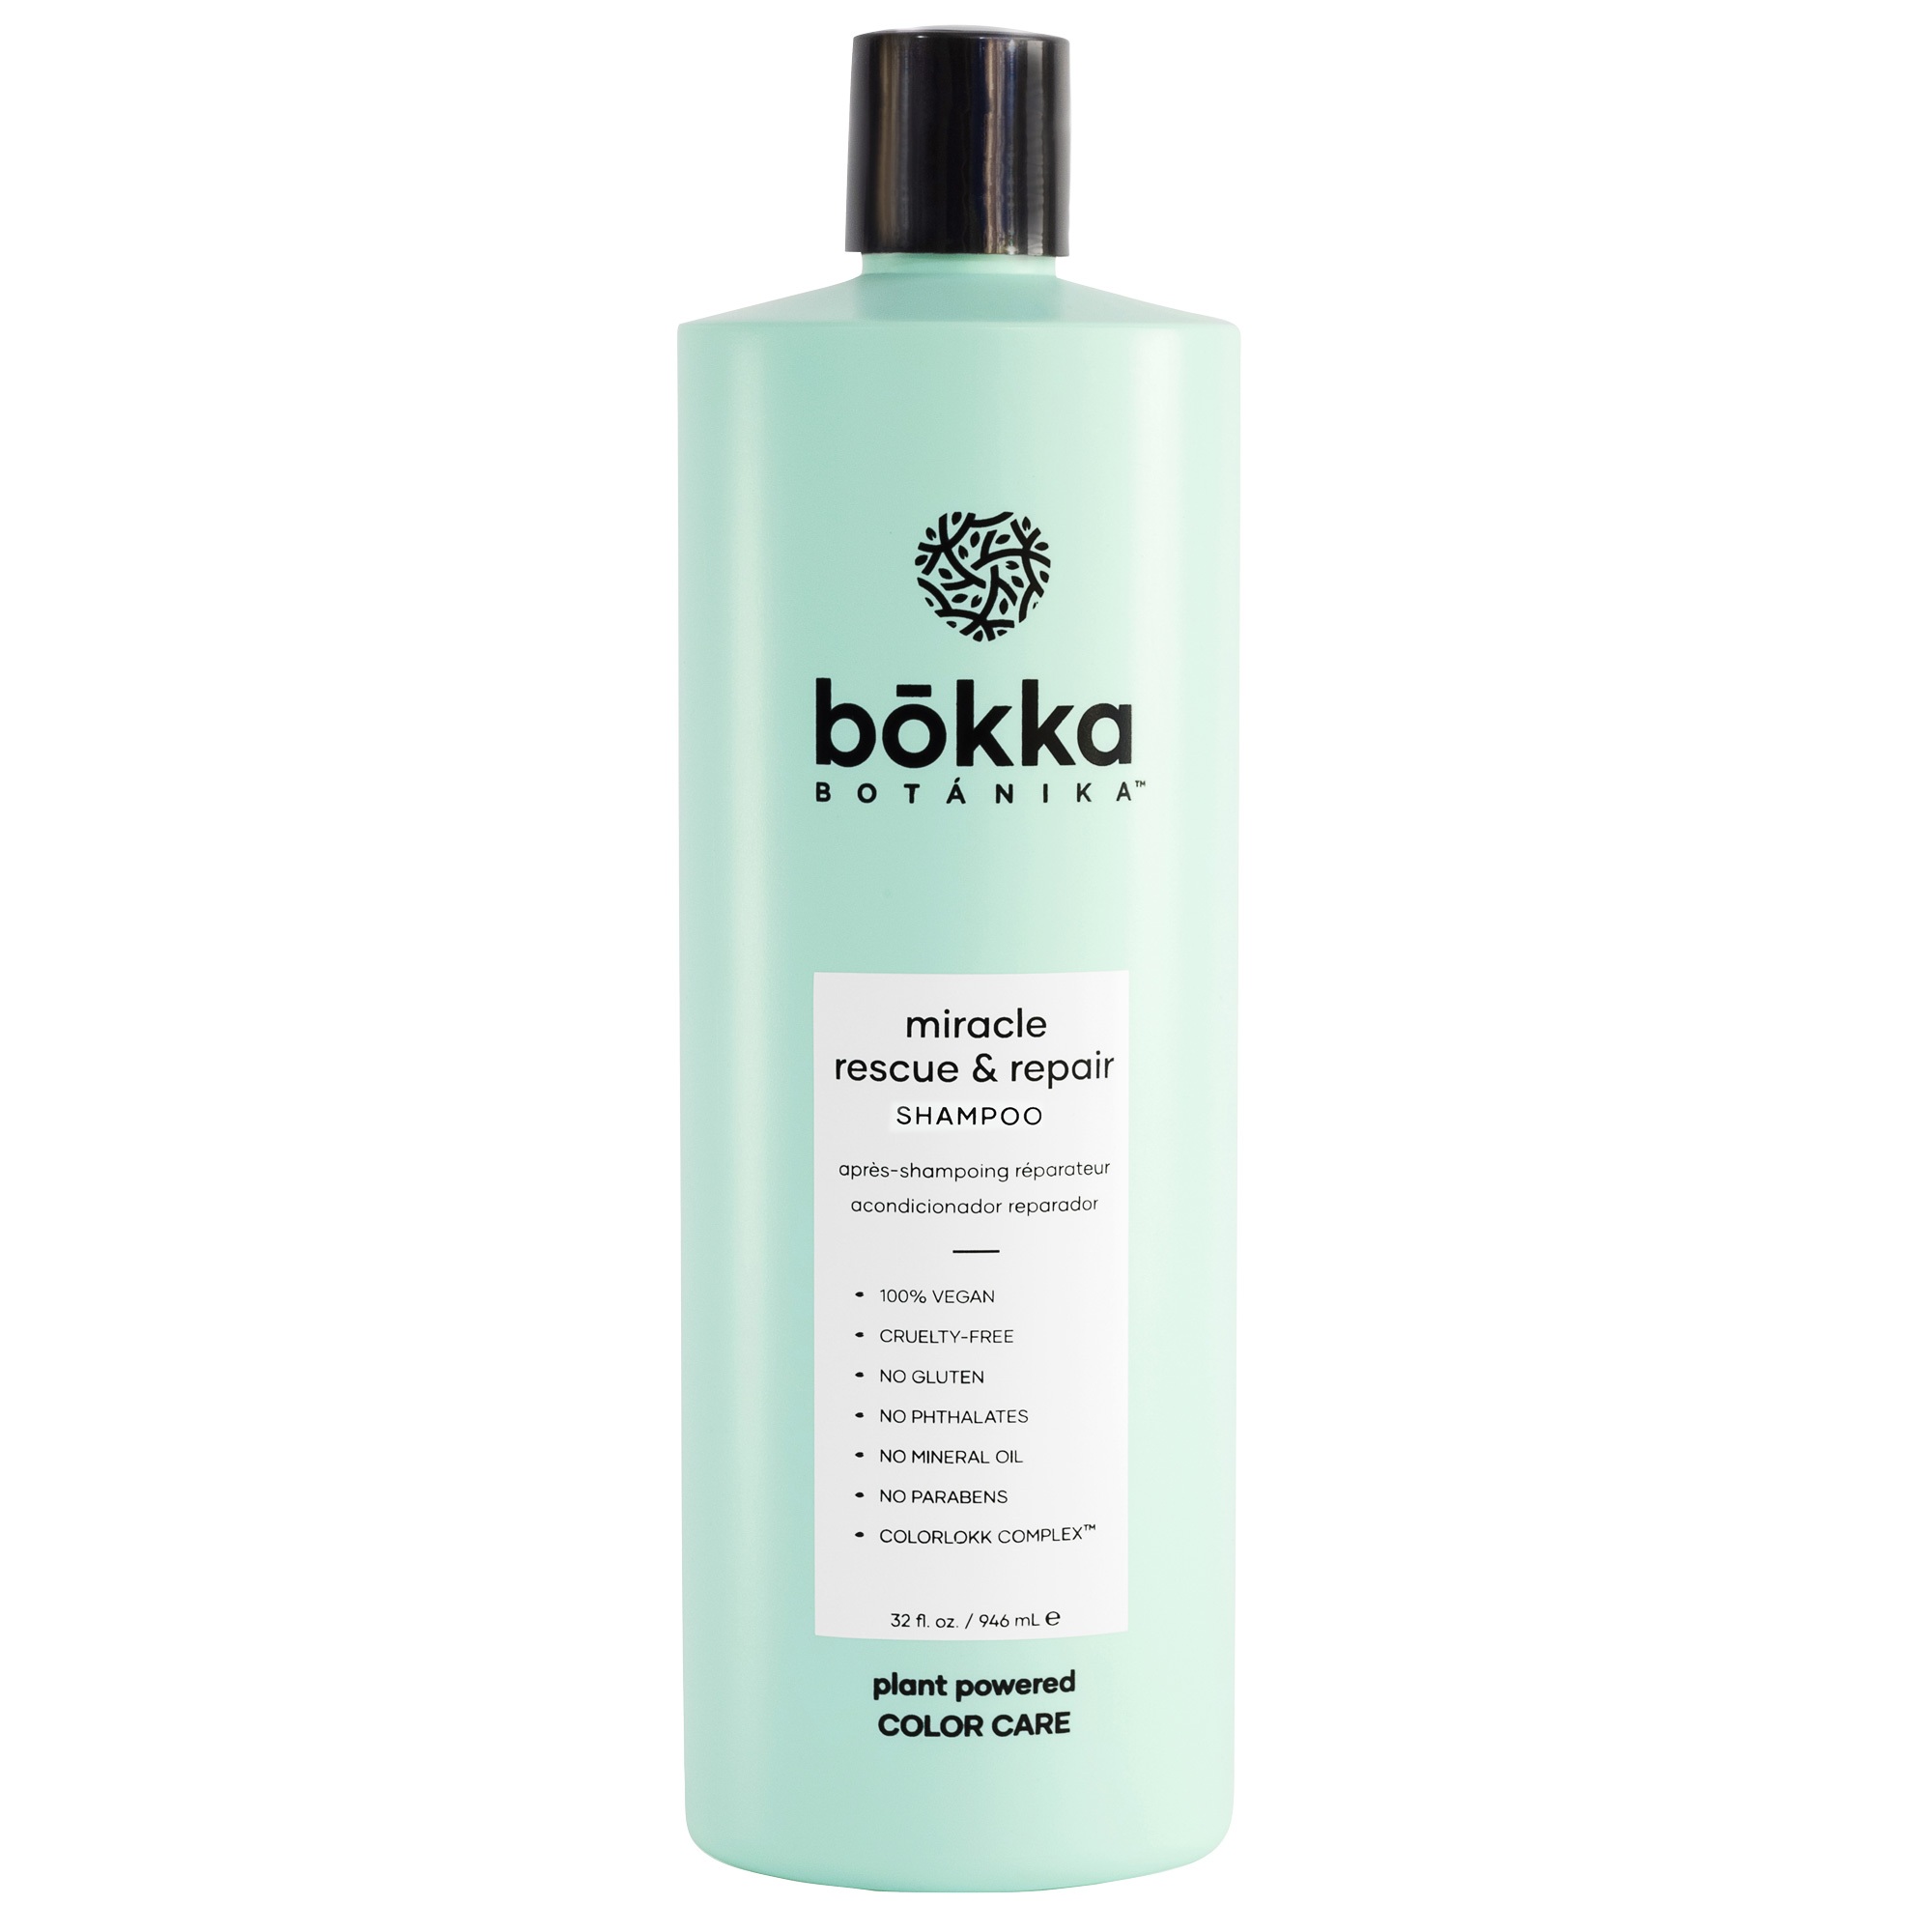 bokka BOTANIKA Miracle Rescue & Repair Shampoo